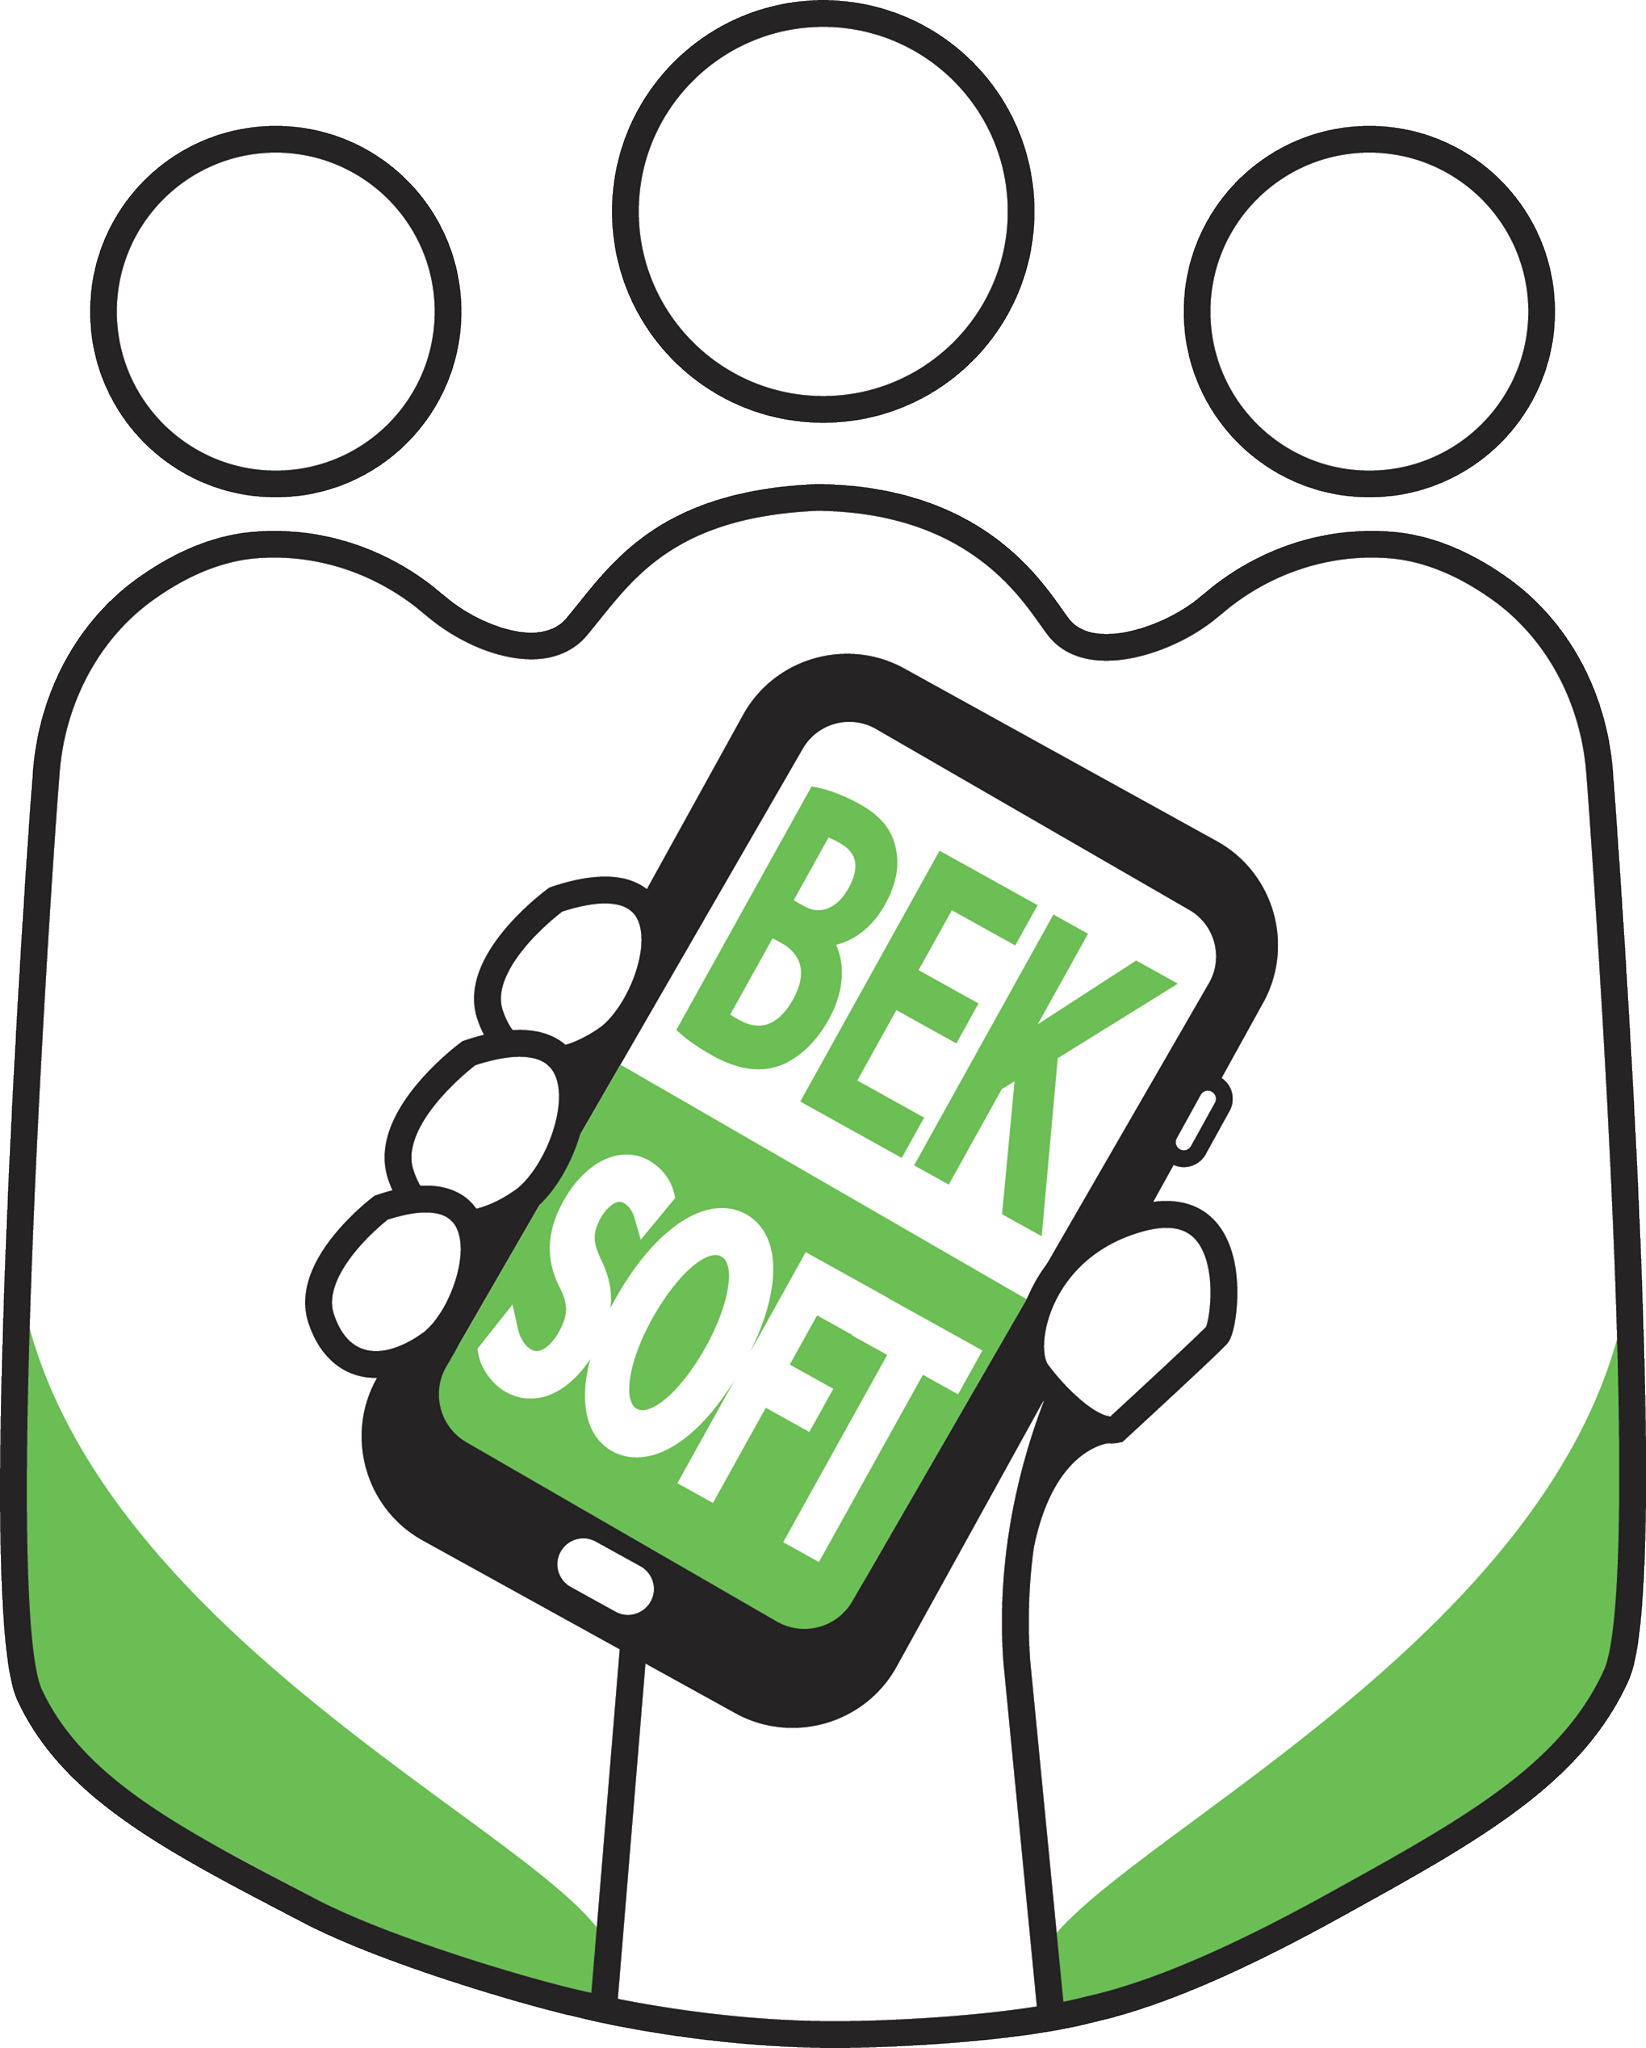 Beksoft Logo